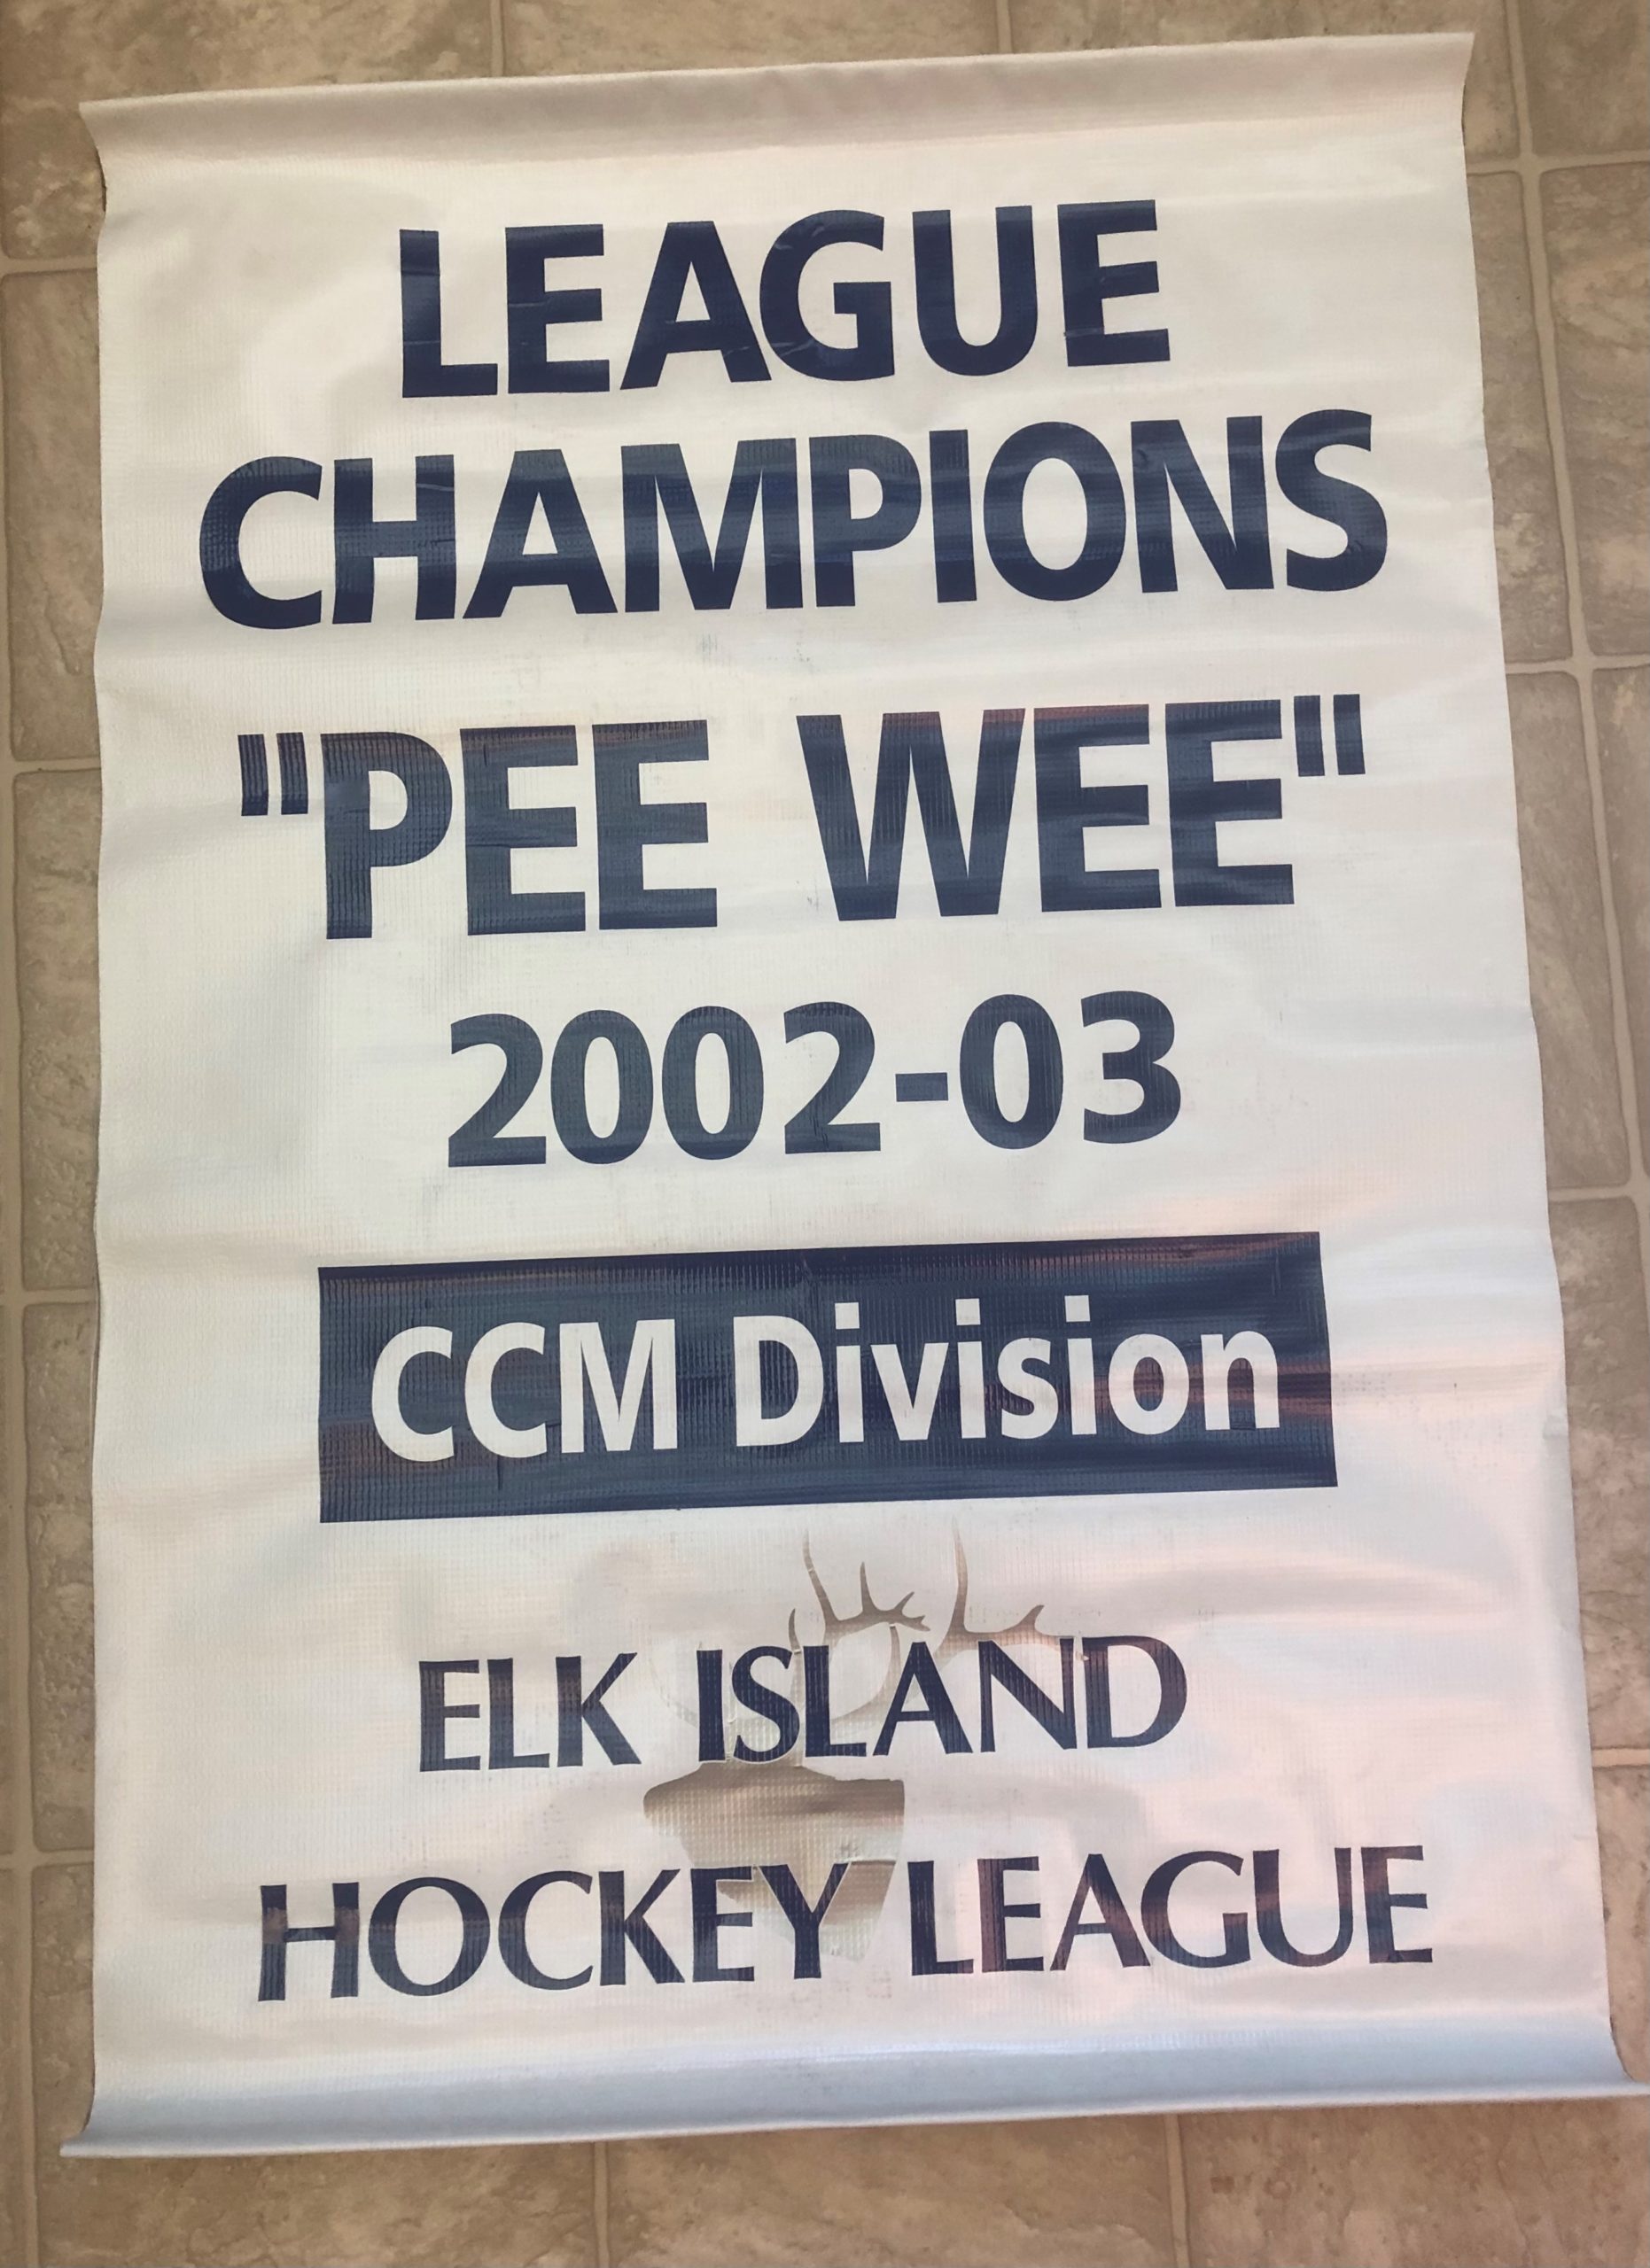 PeeWee 2002-03